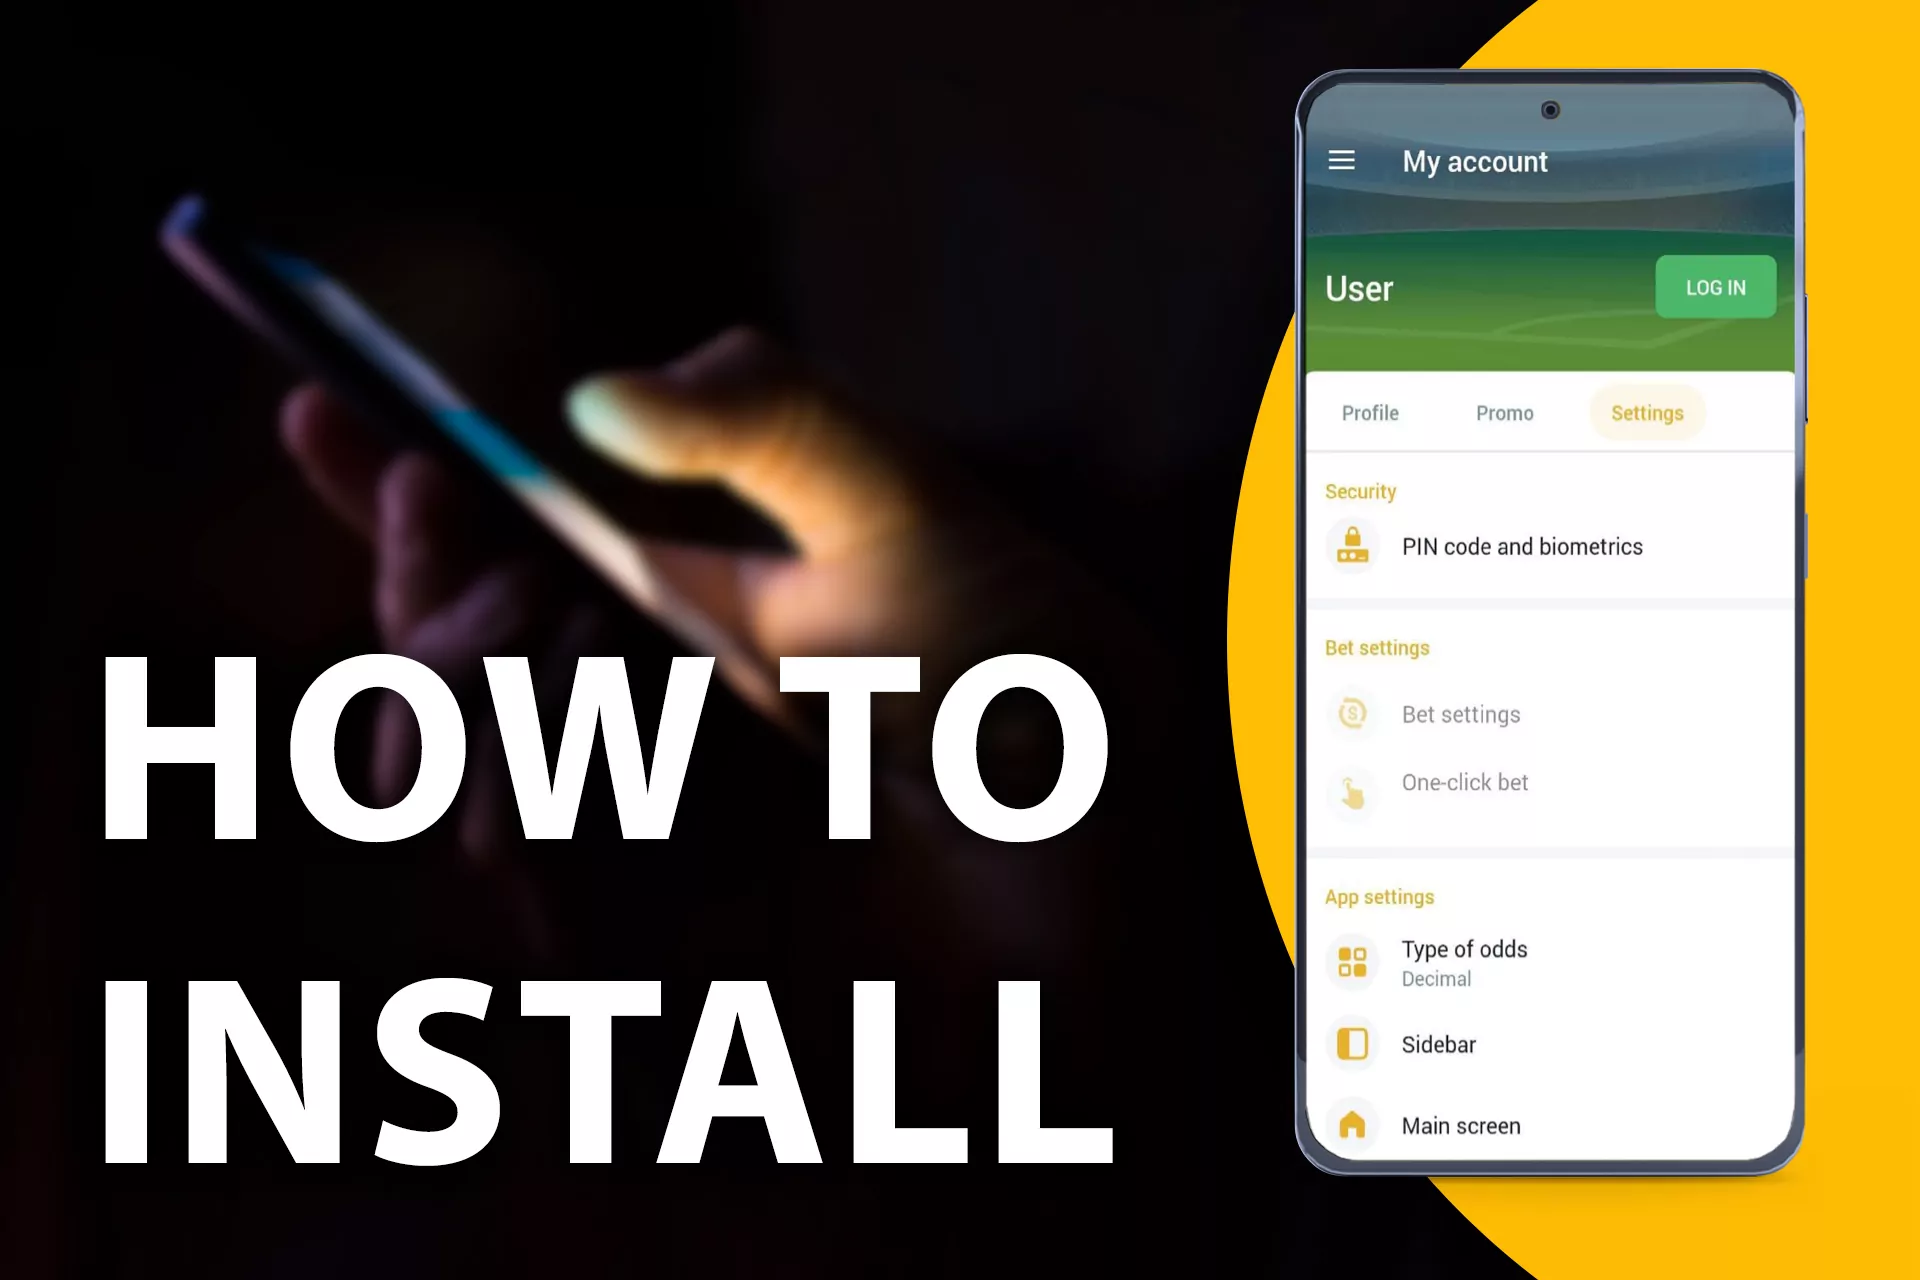 Install Melbet mobile app in 4 simple steps.